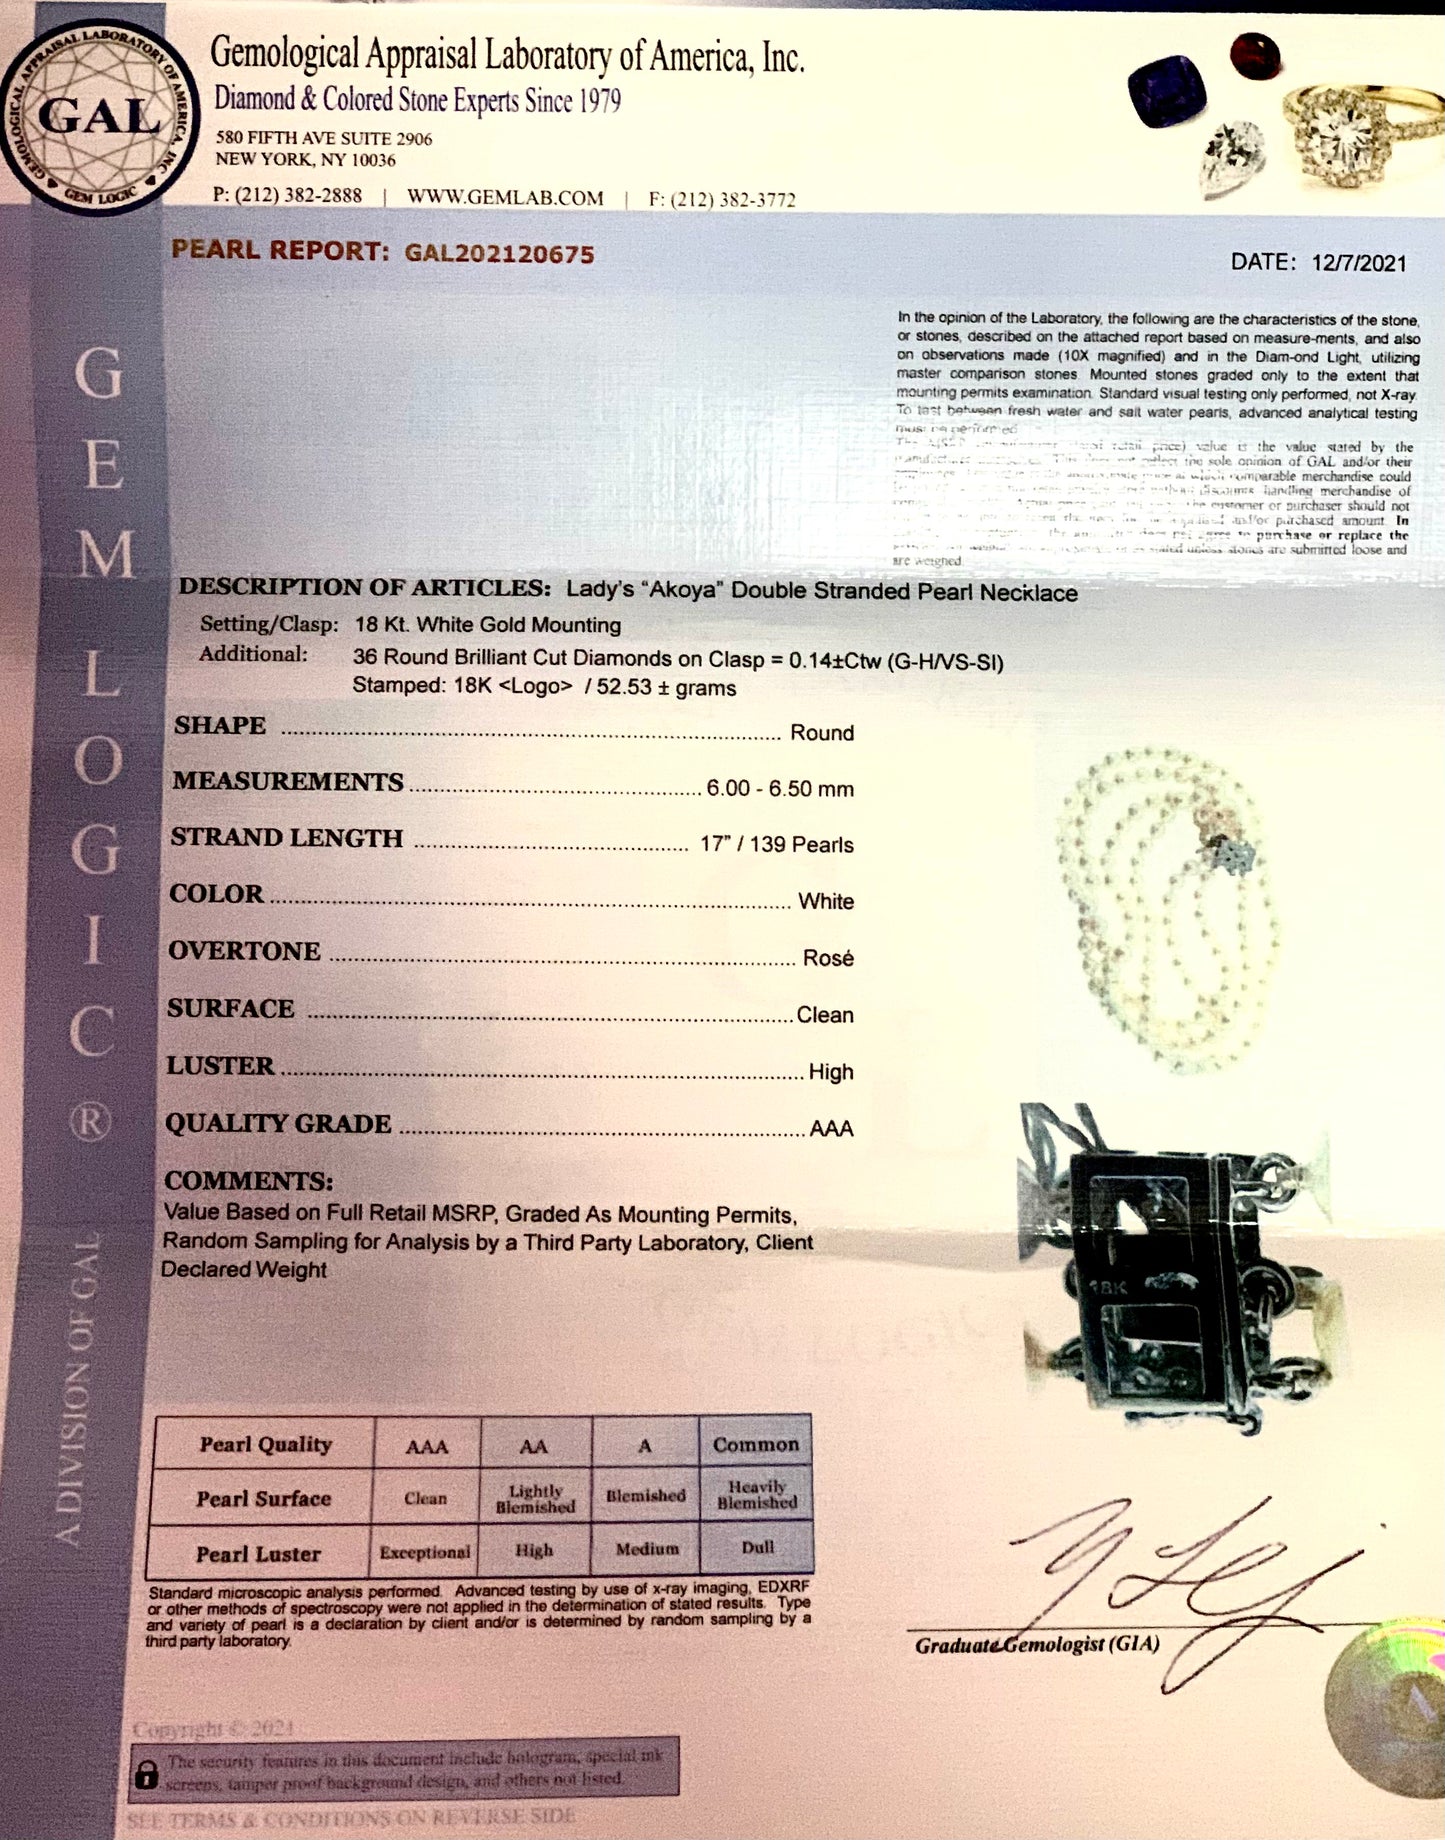 Diamond Akoya Pearl 2-Strand Necklace 17" 18k Gold 6.5mm Certified $8,750 120675 - Certified Fine Jewelry